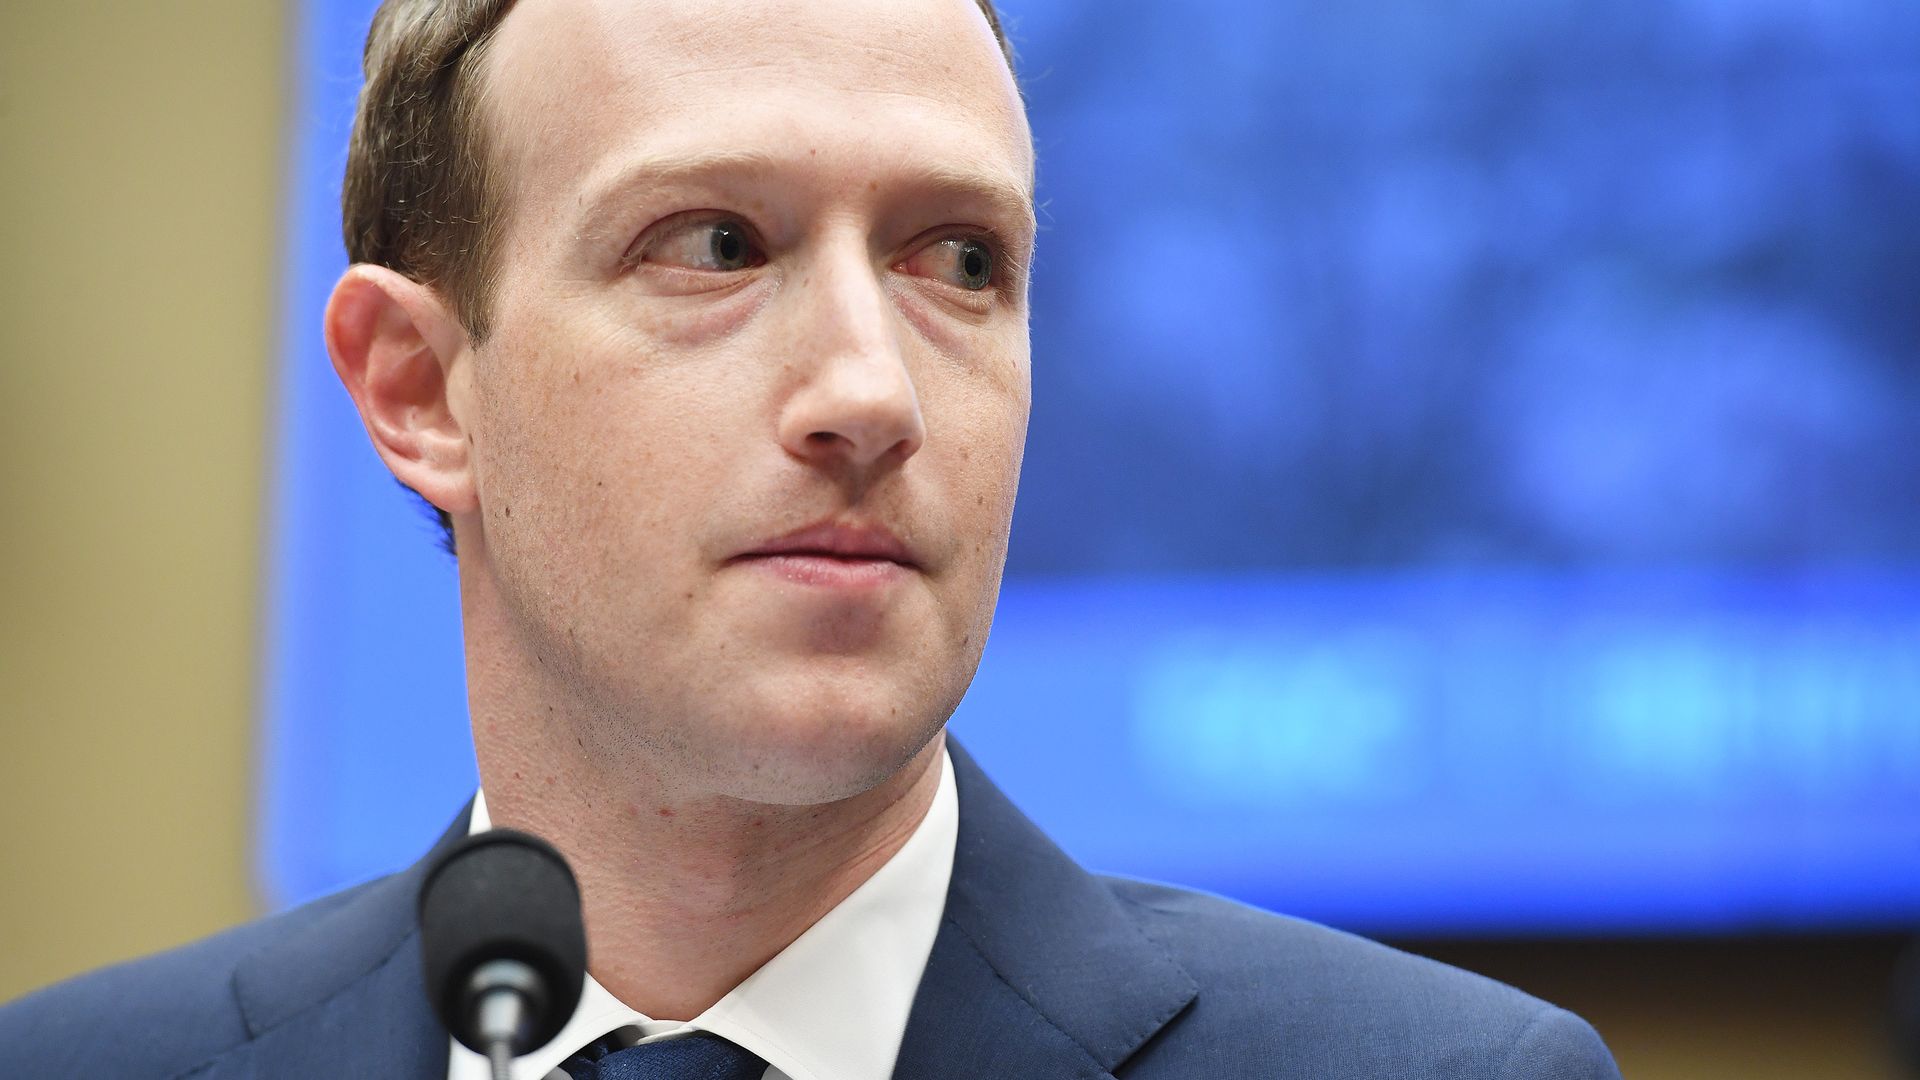 A close-up shot of Facebook's Mark Zuckerberg wearing a suit